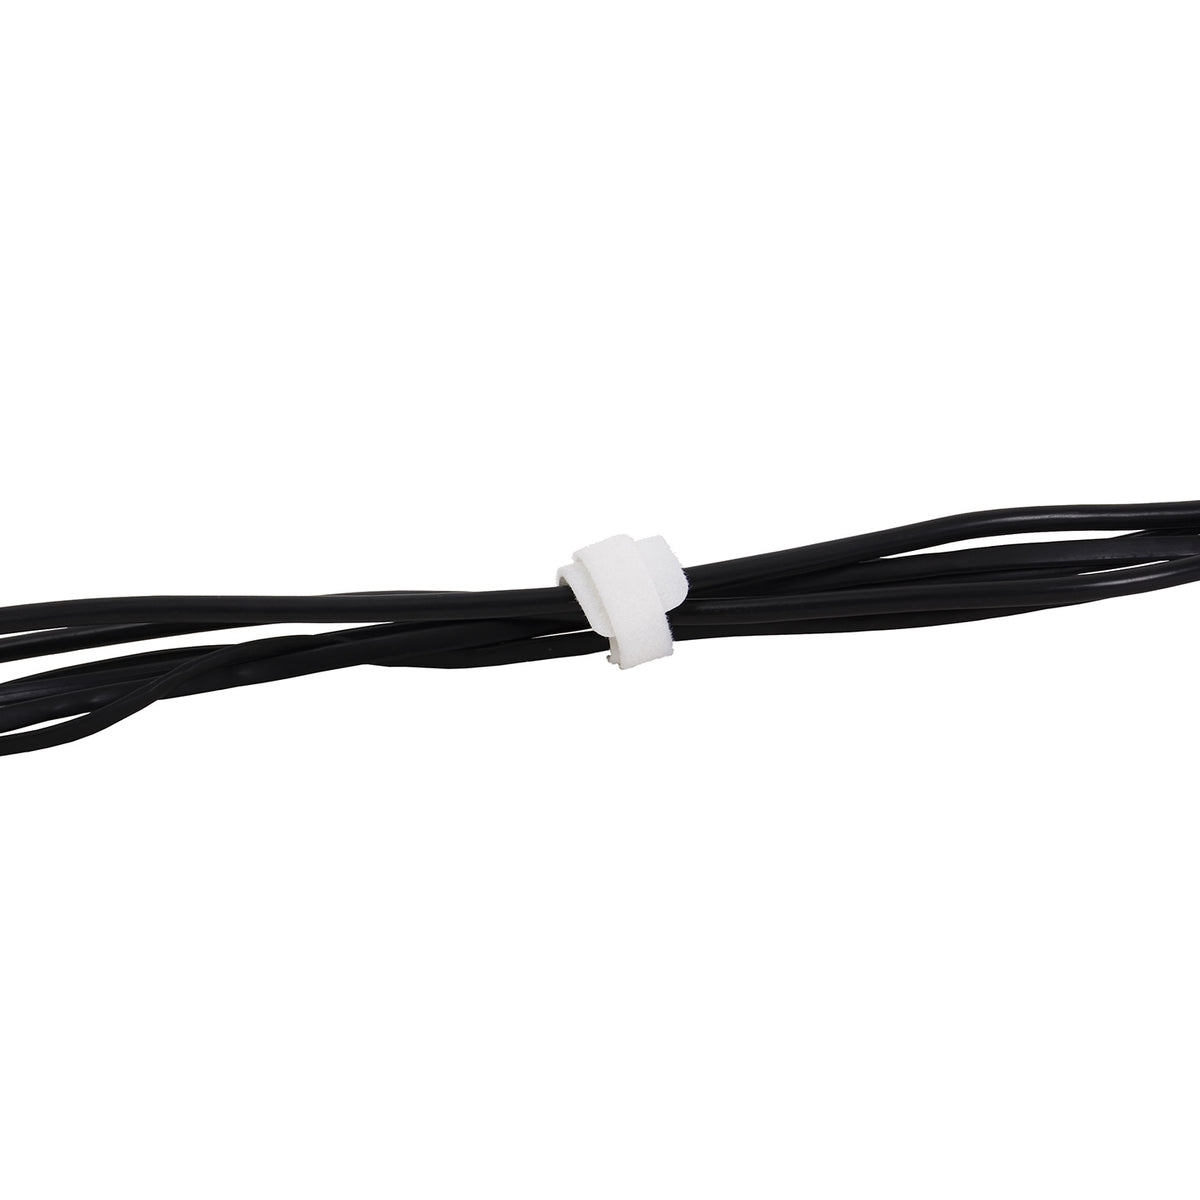 Addit cable loop ties - 10 pcs